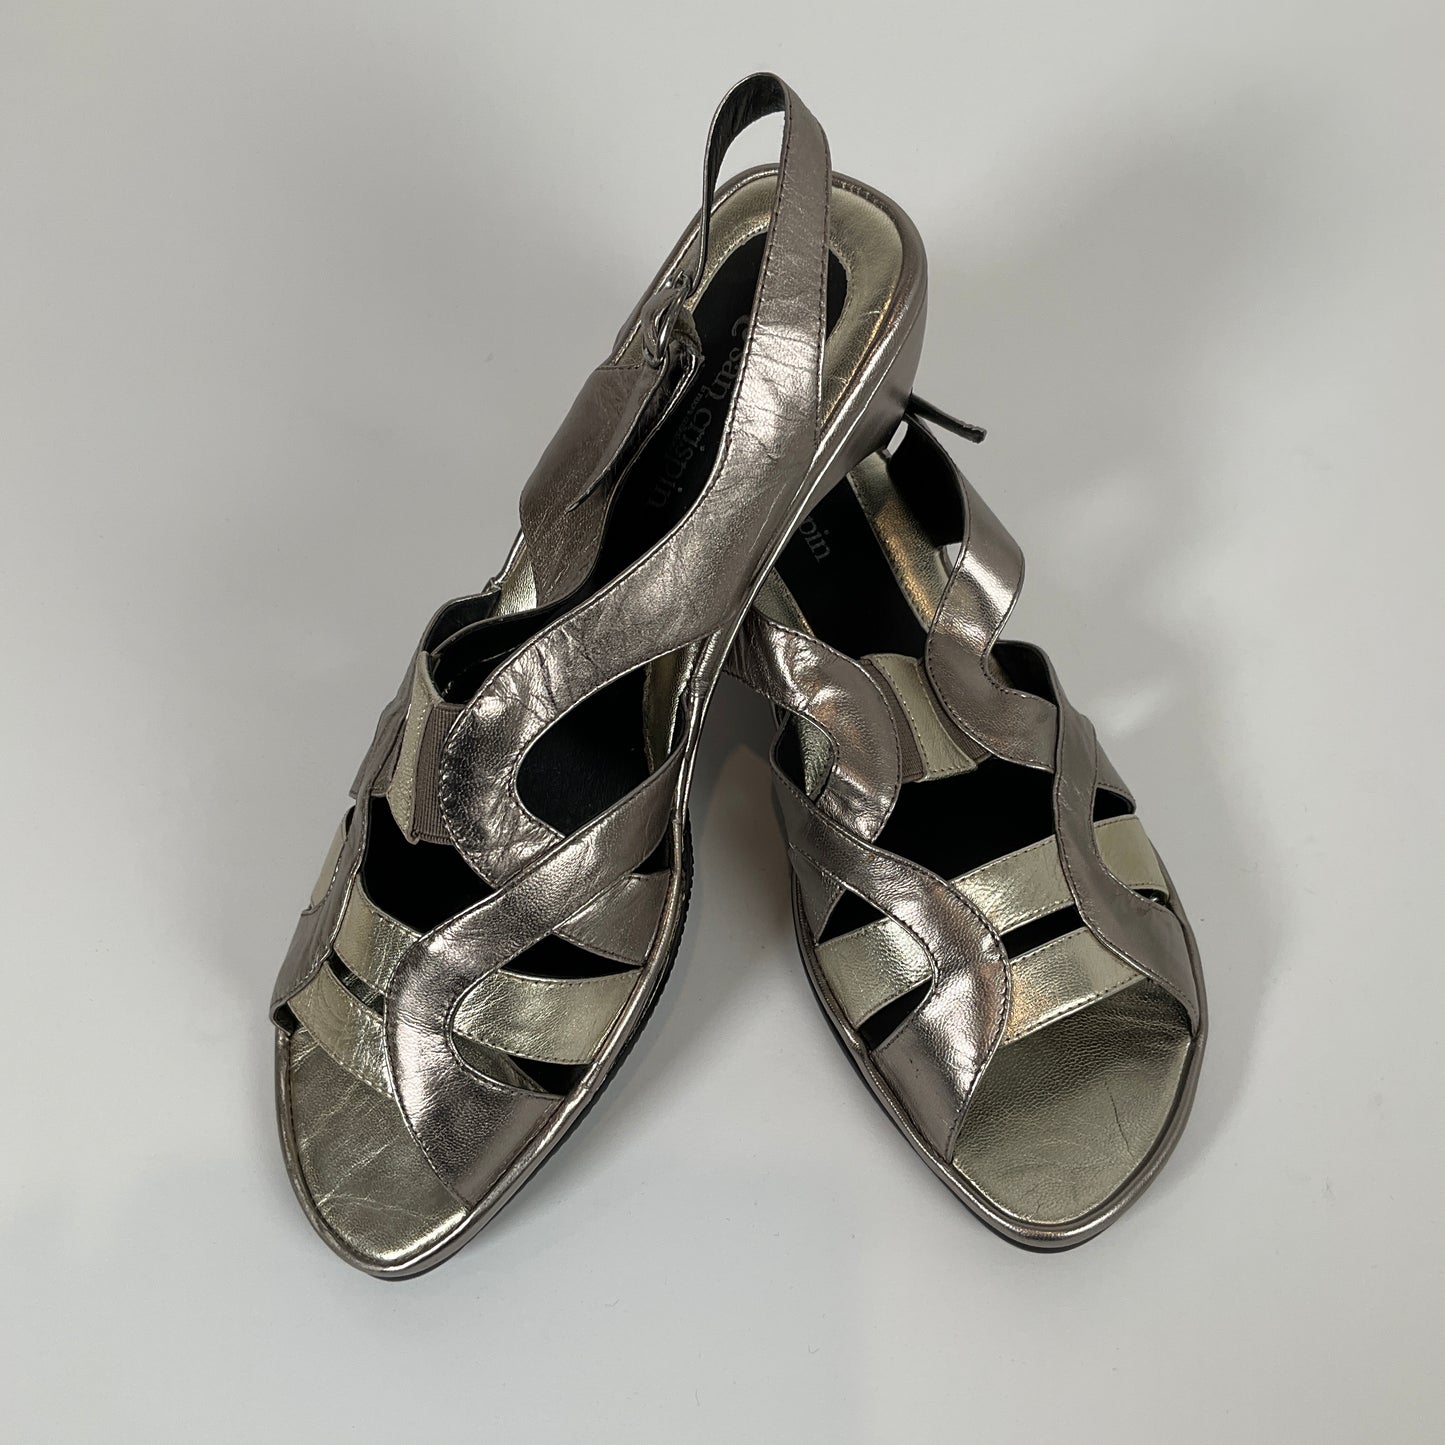 San Crispin - Sandals - Size 39